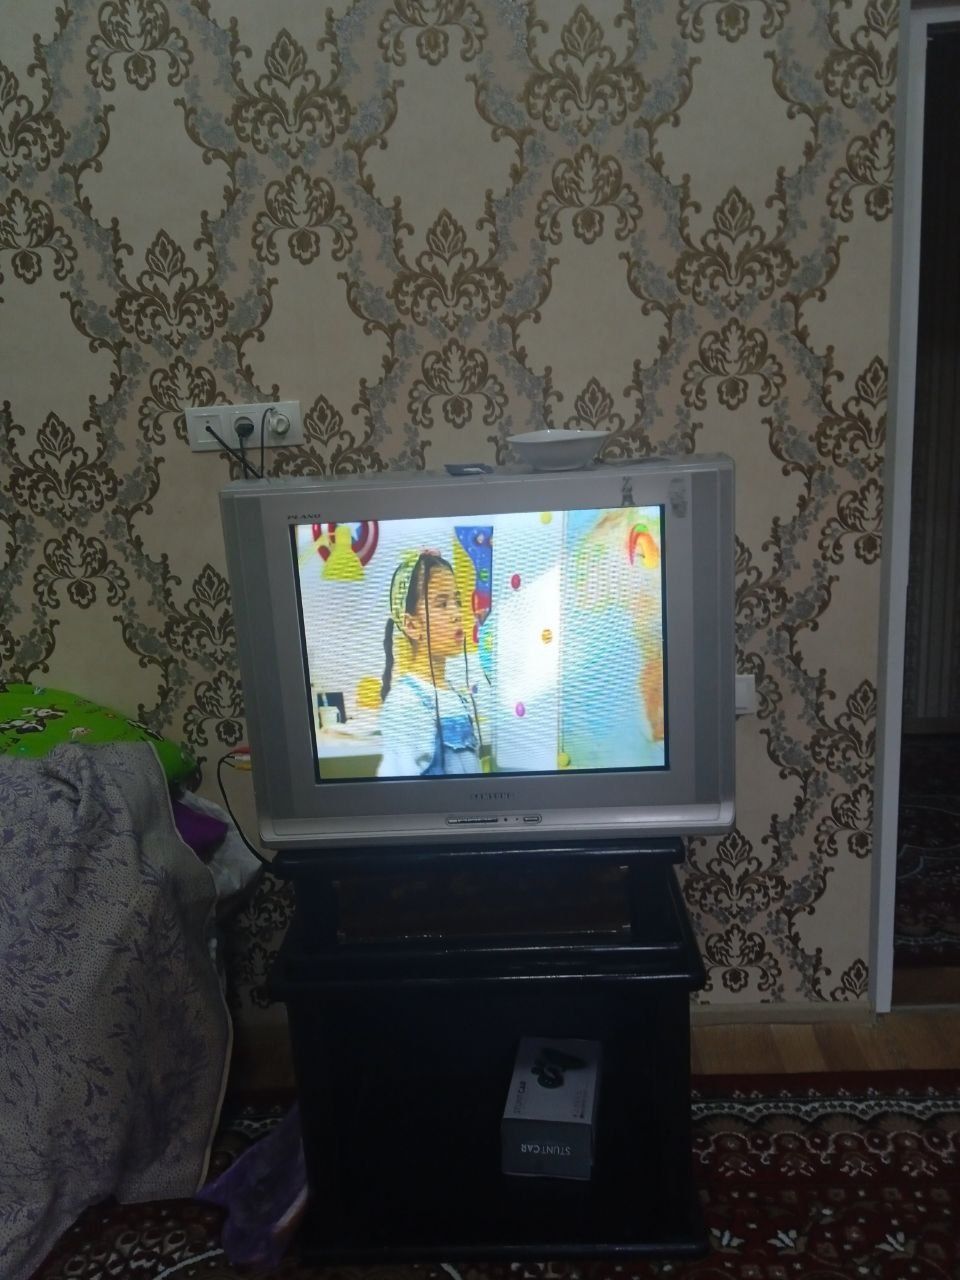 Samsung televizor